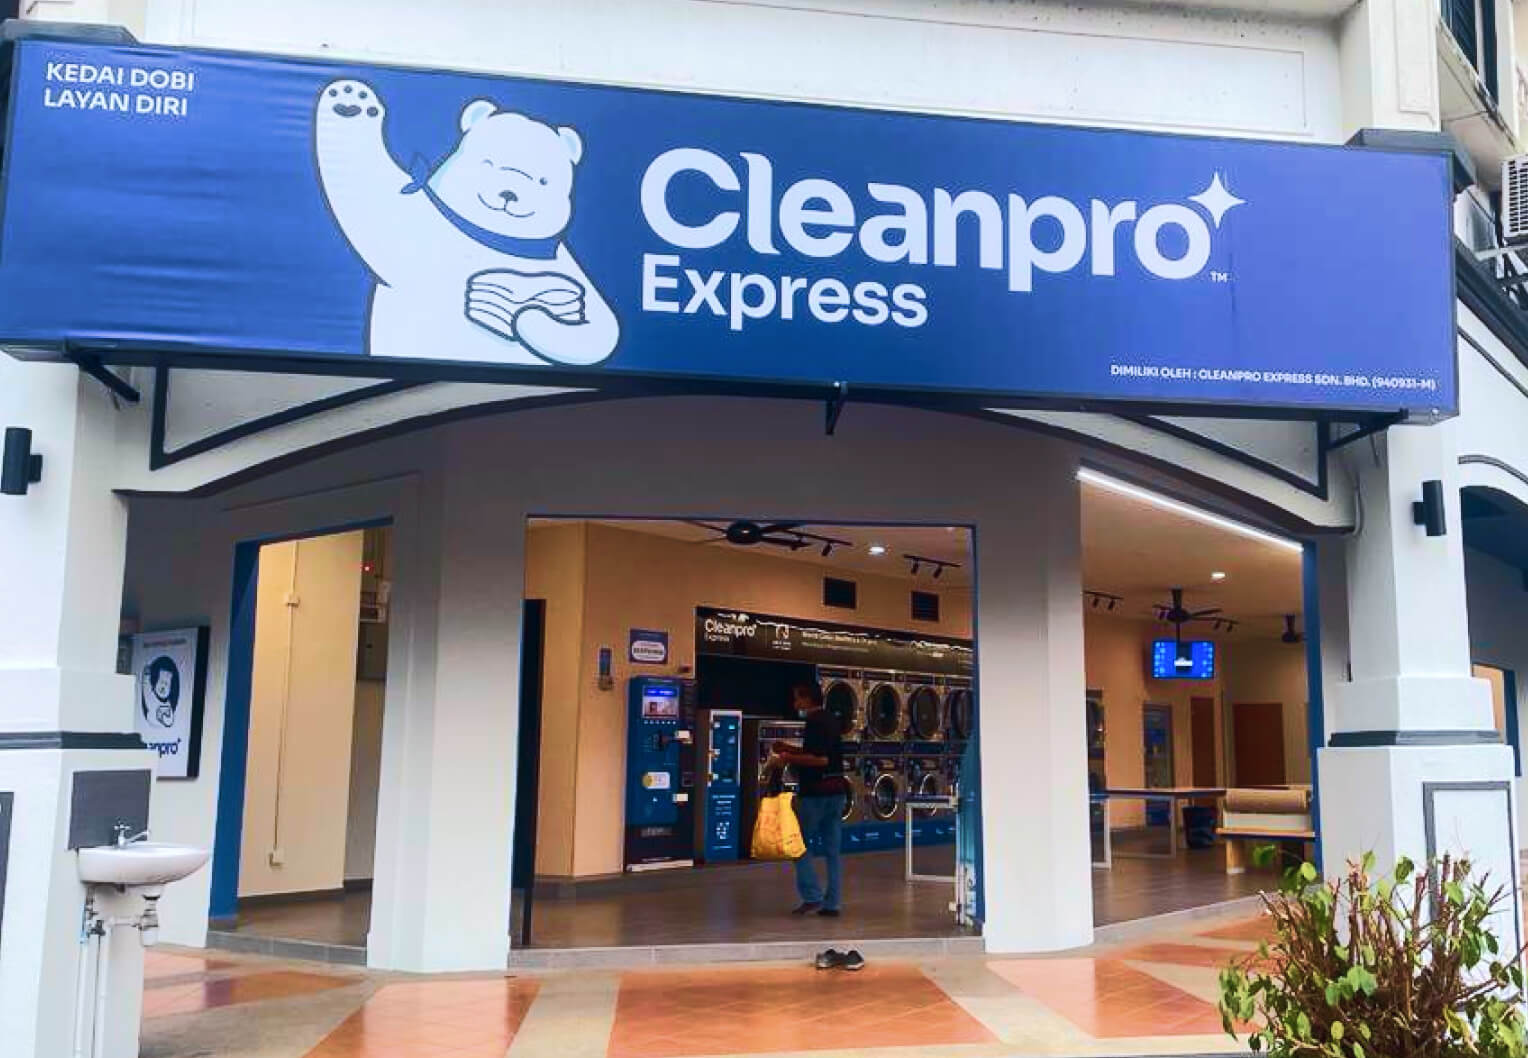 Cleanpro Express BK5 Bandar Kinrara storefront